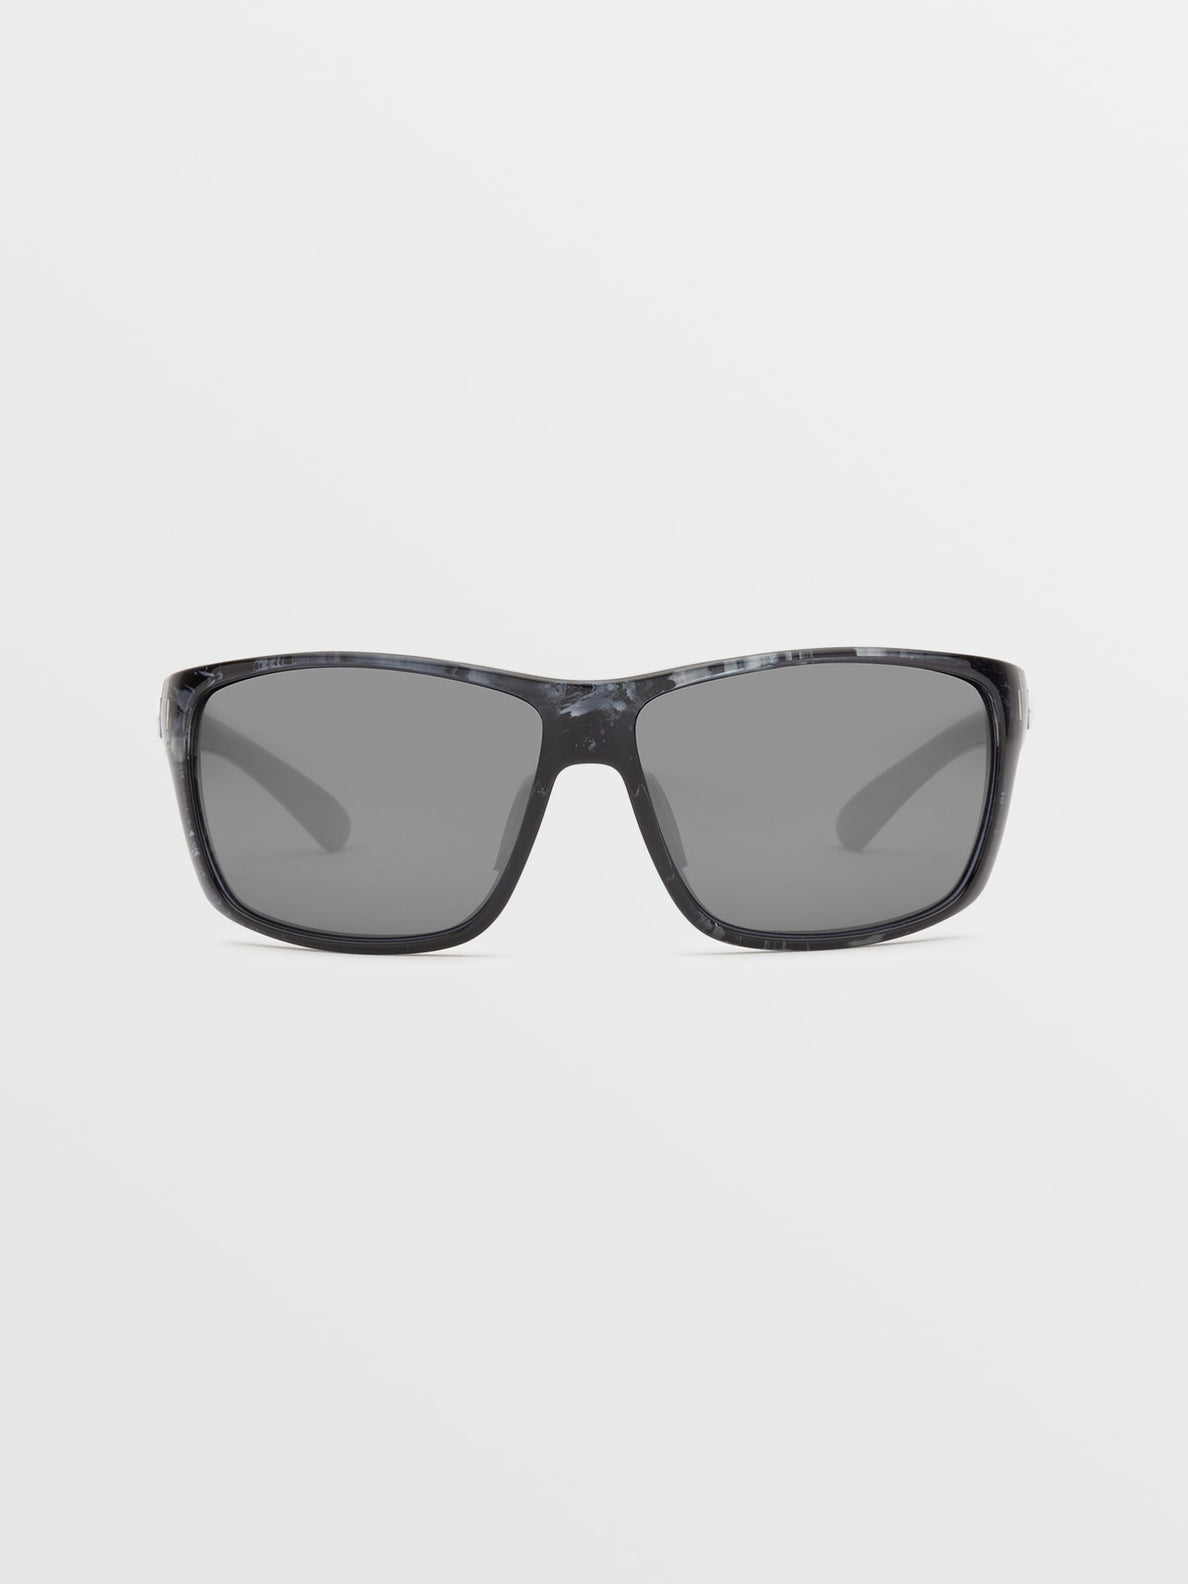 Roll Sunglasses - Gloss Marble/Silver Mirror (VE01504118_MRB) [F]